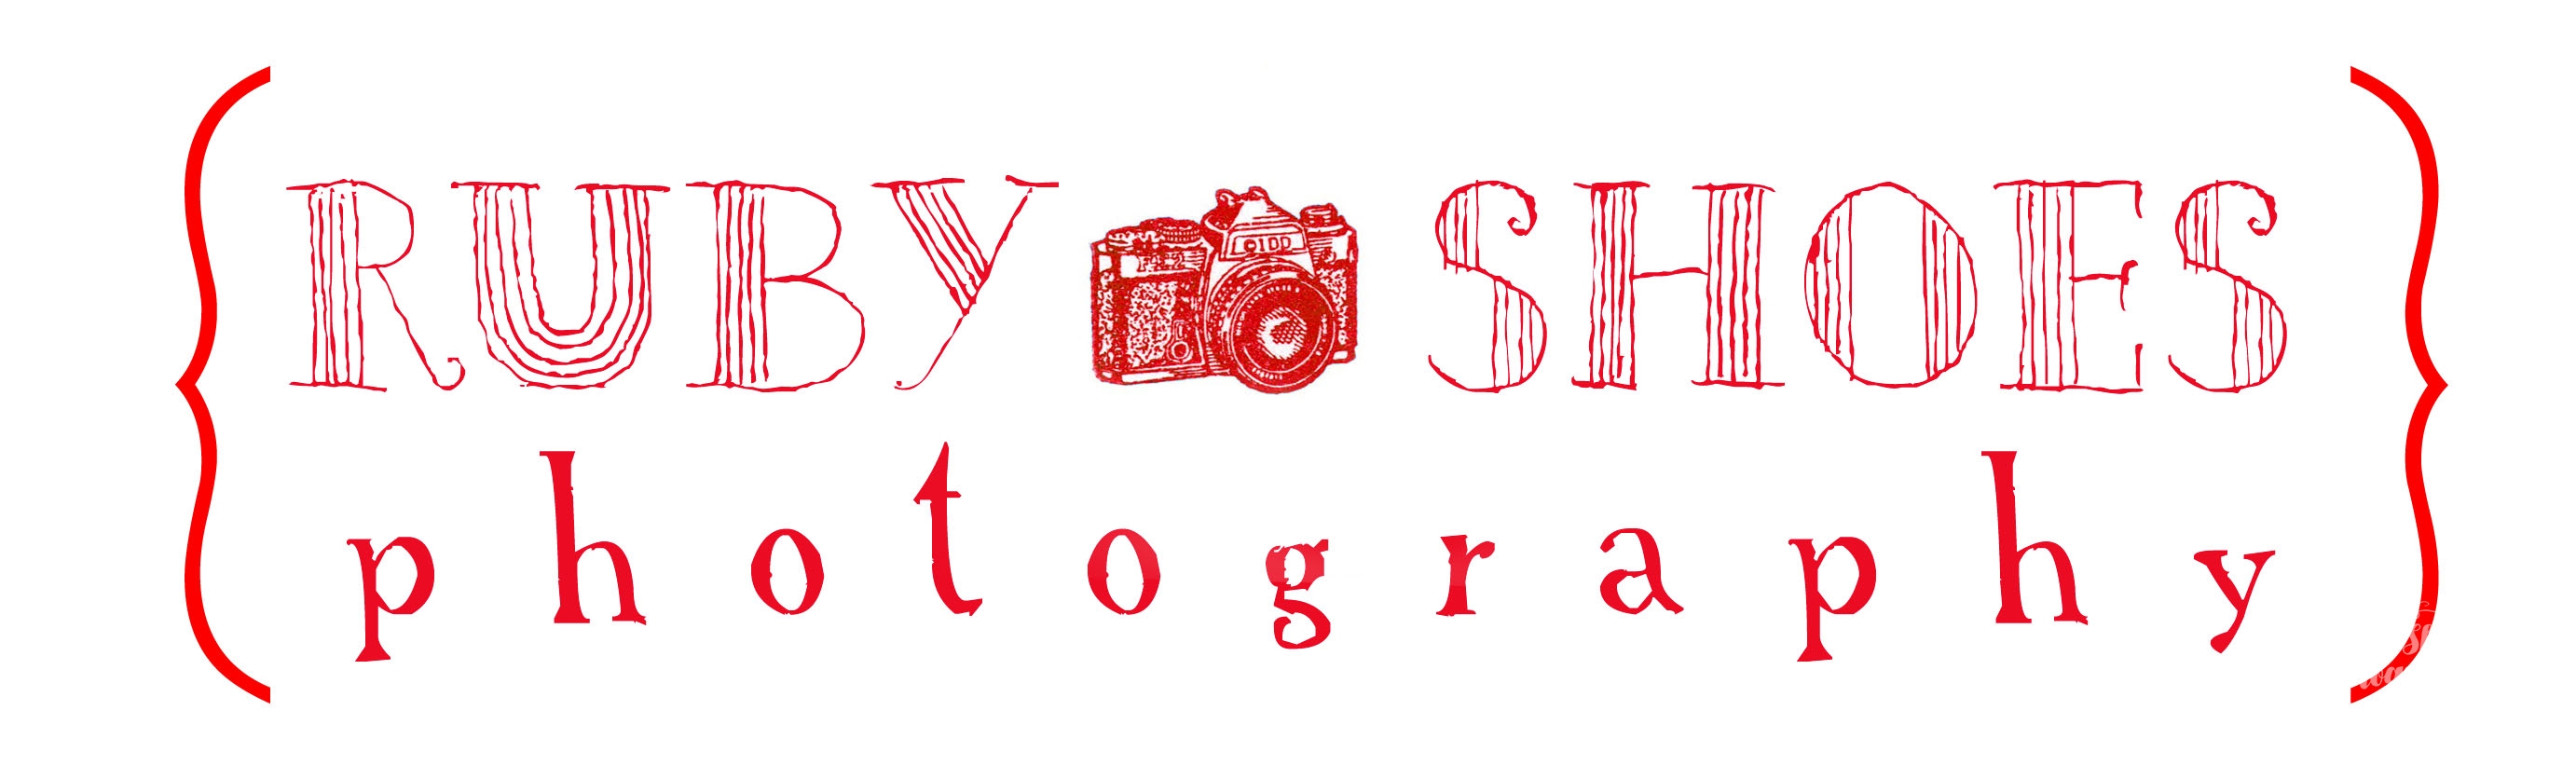 (c) Rubyshoesphotography.com